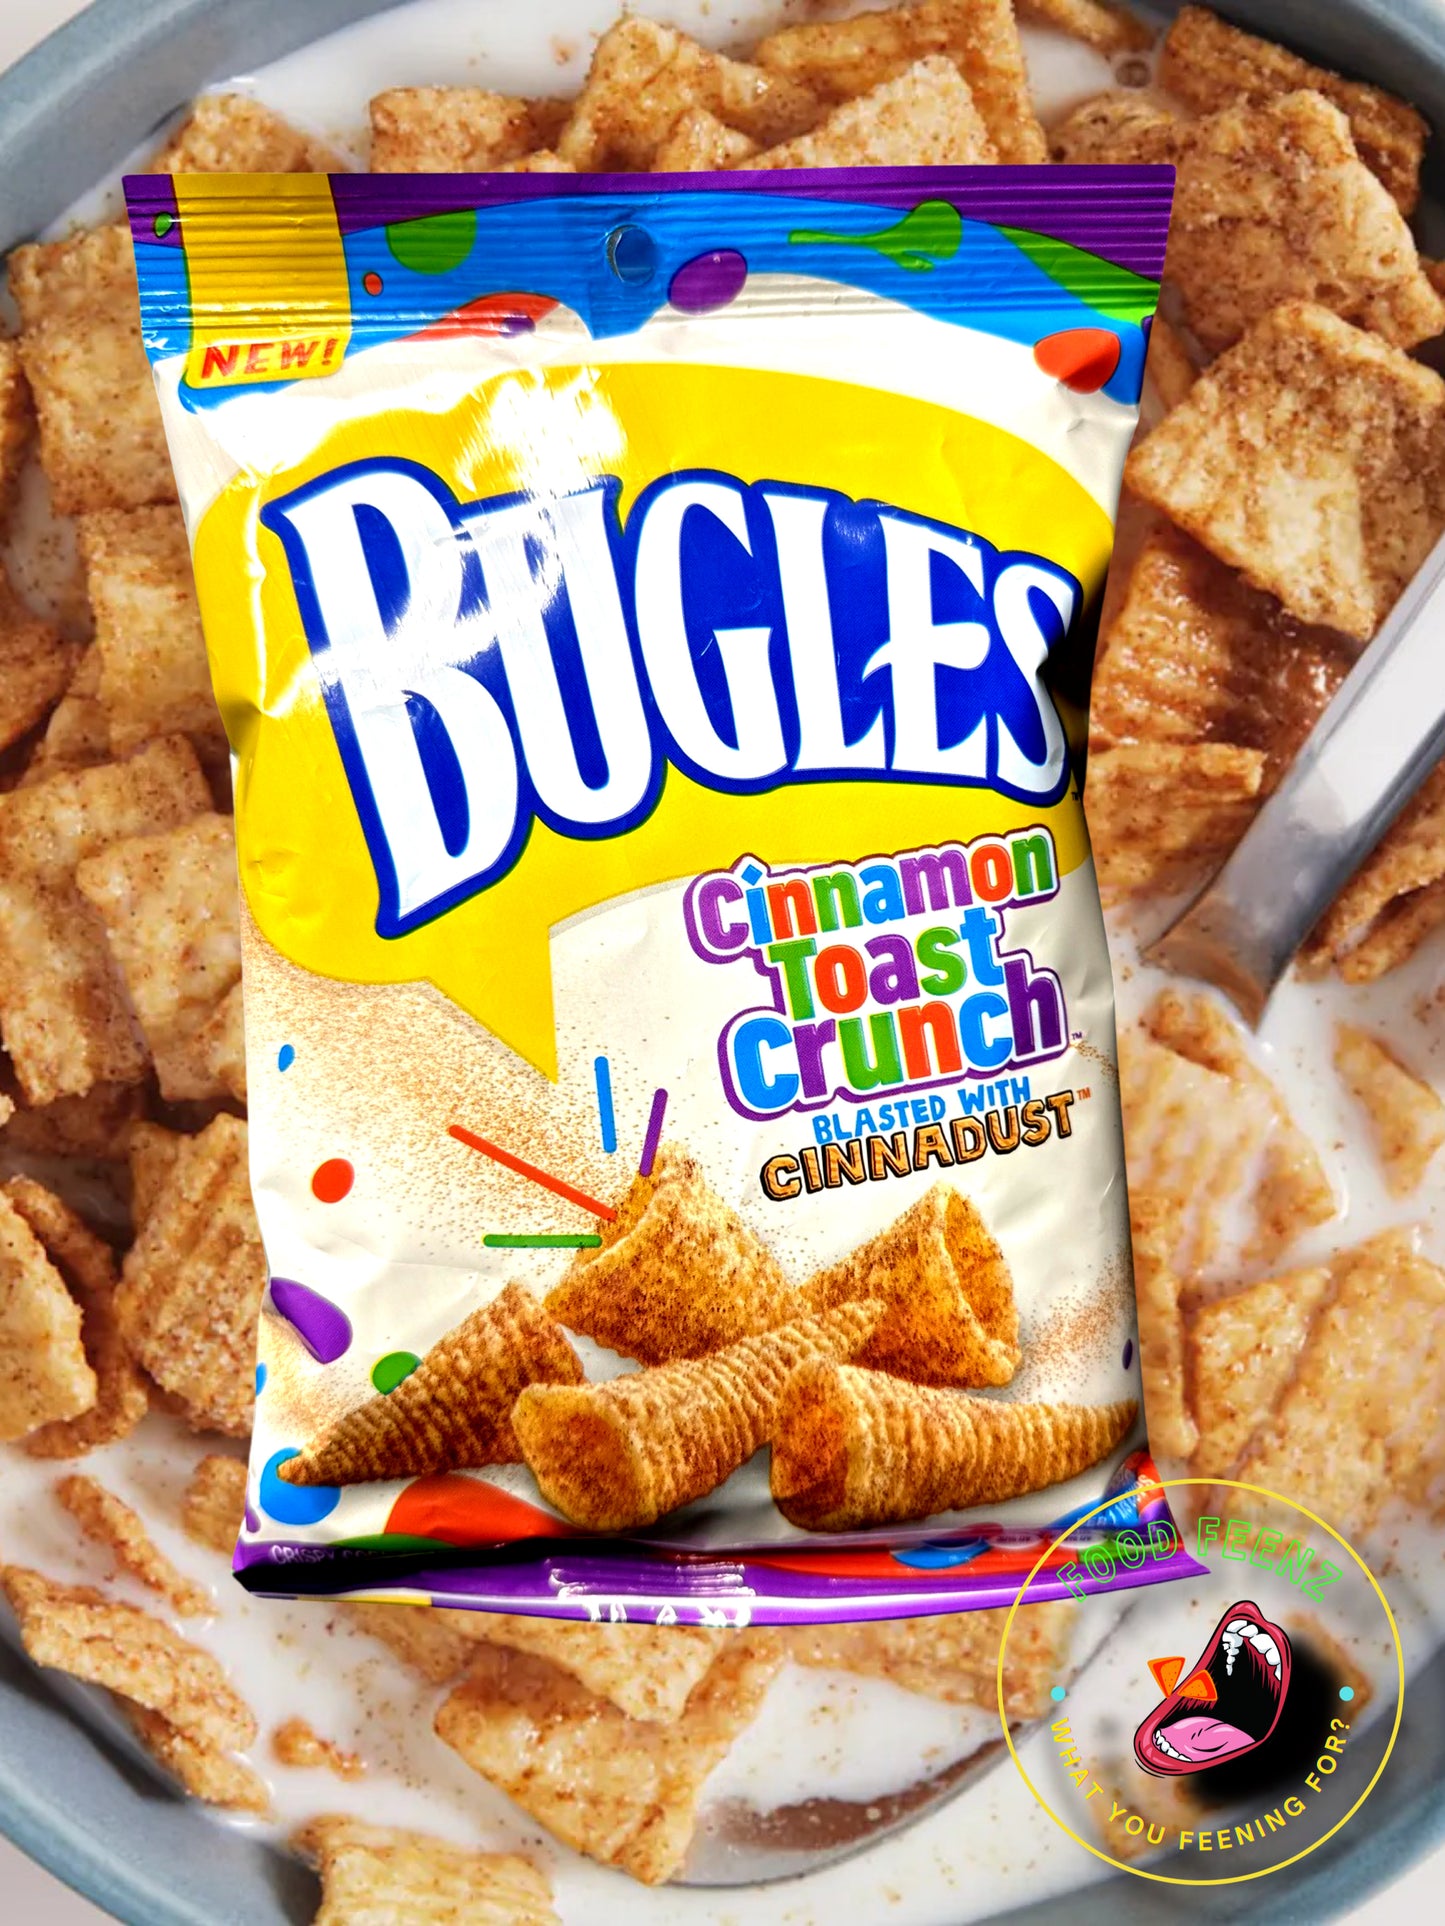 NEW Bugles Cinnamon Toast Crunch Flavor